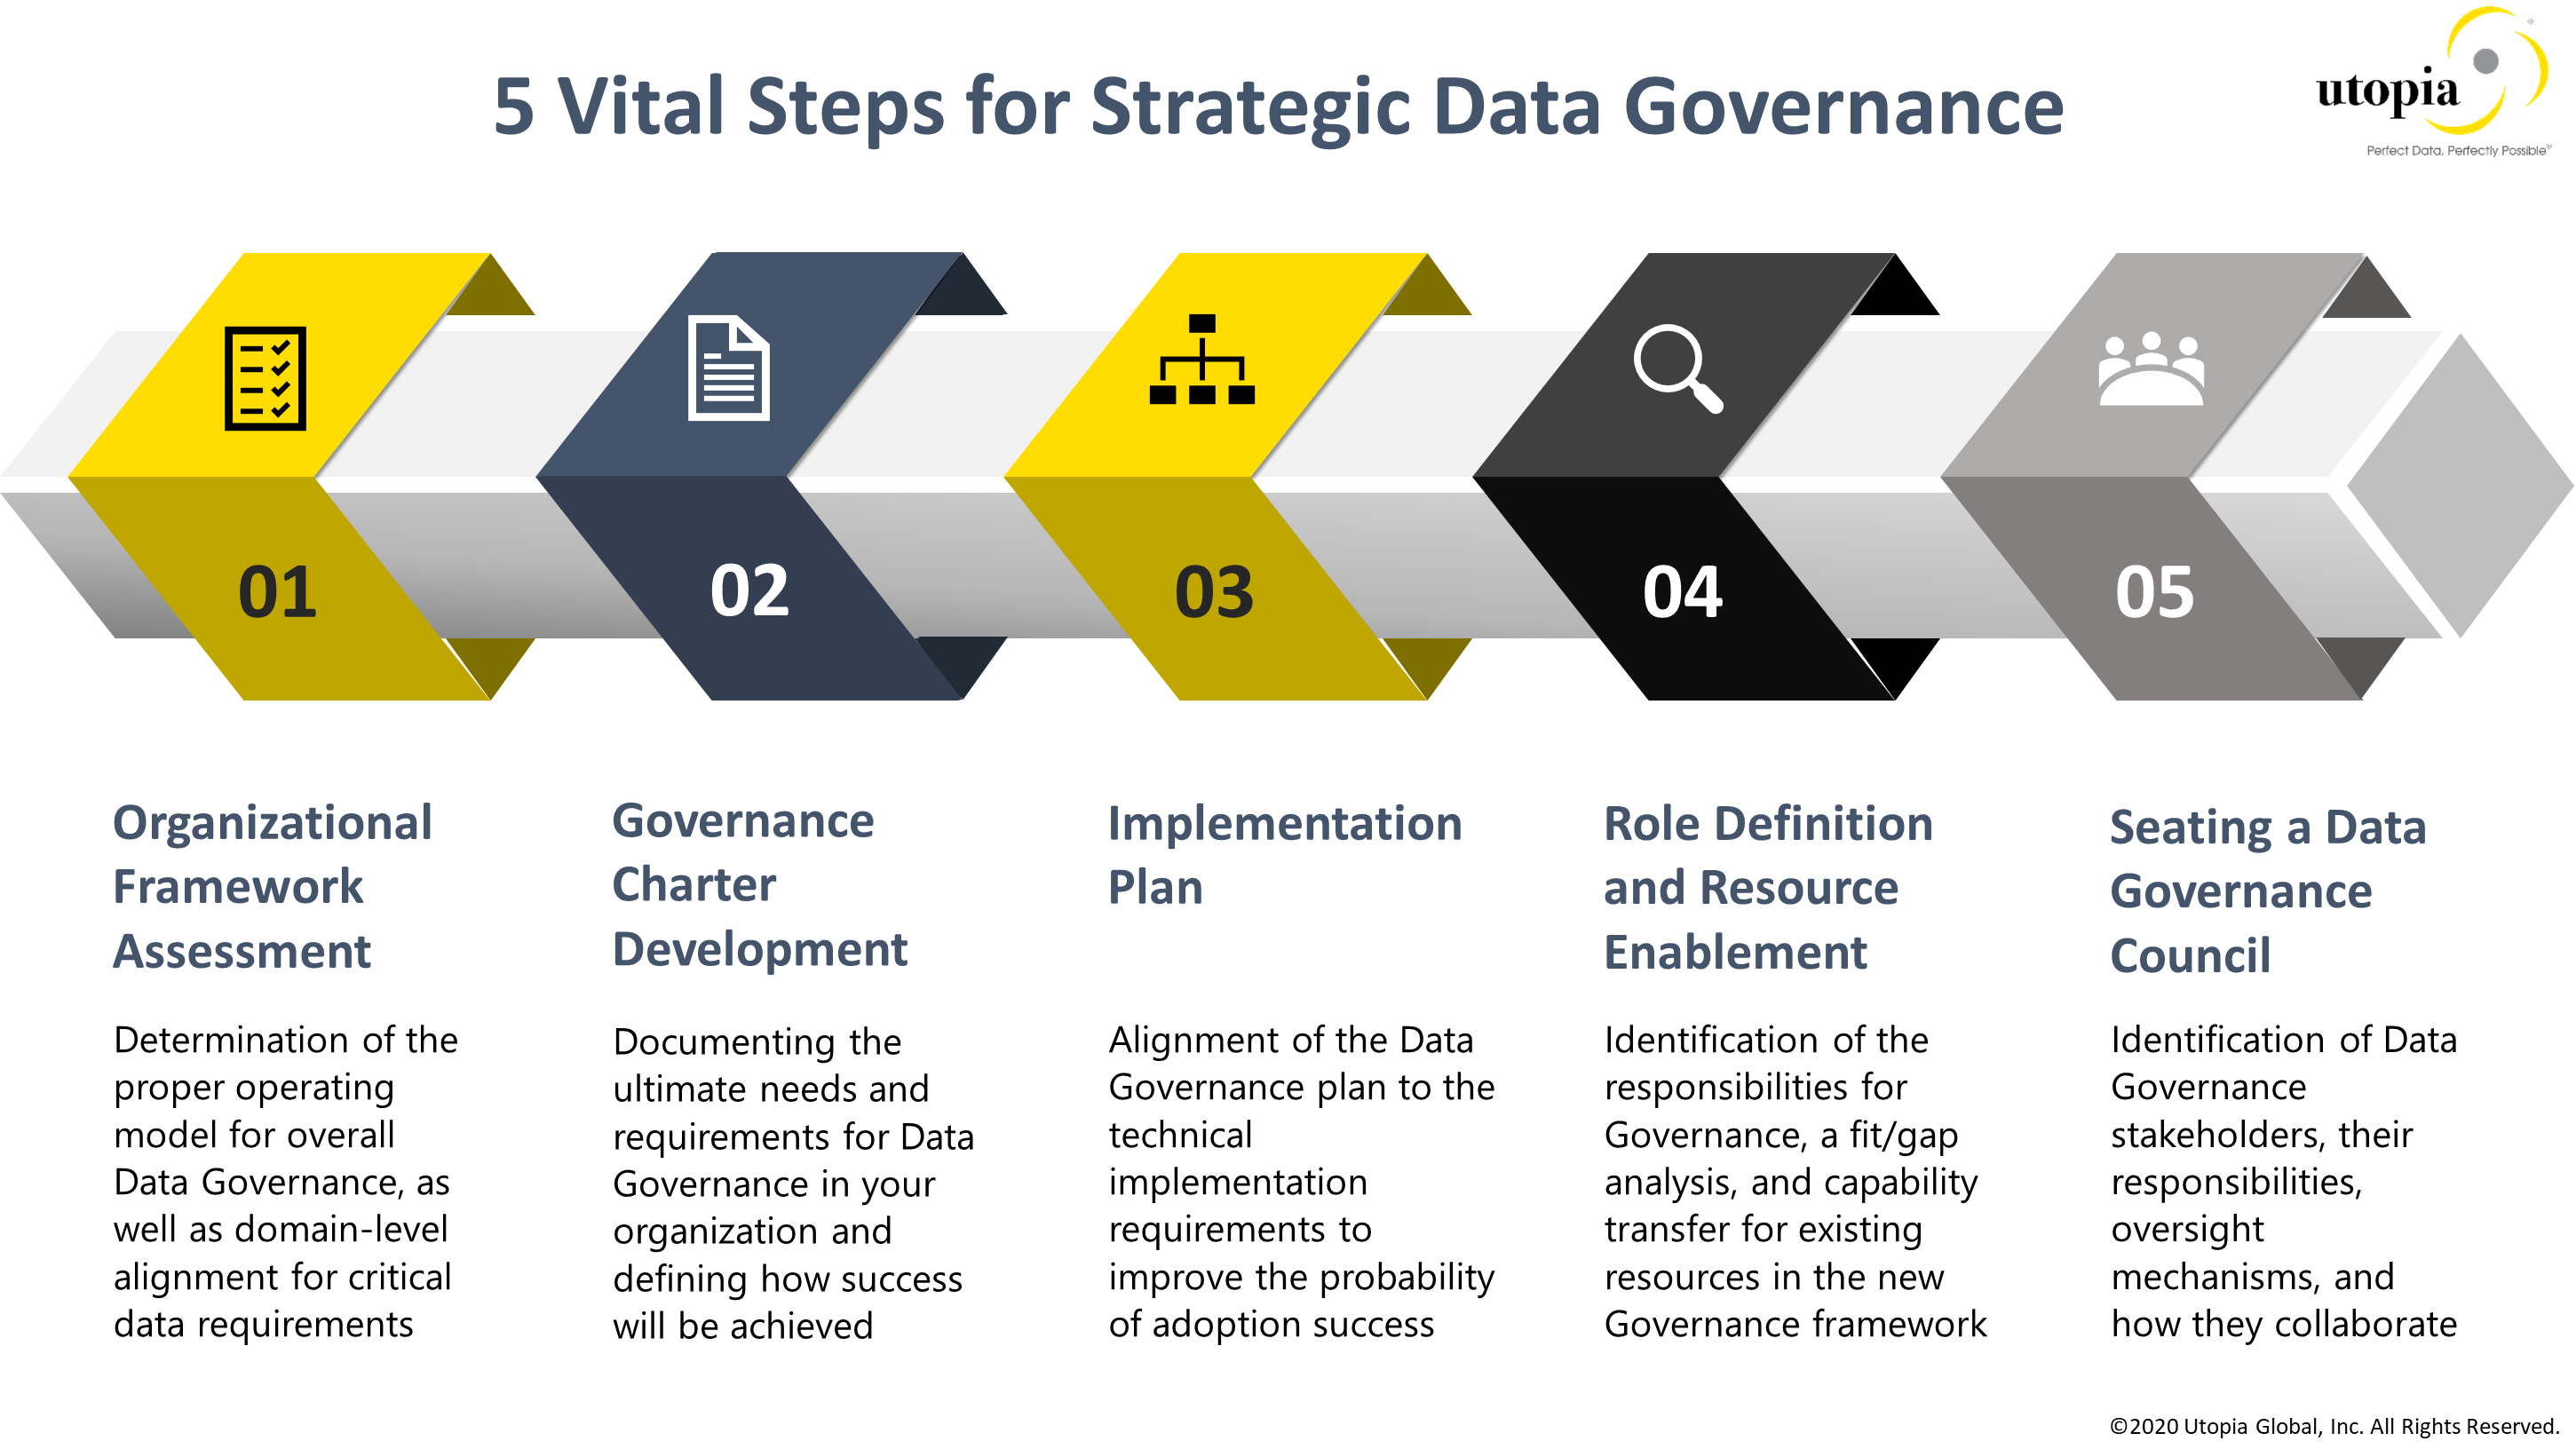 research on big data governance of university information management